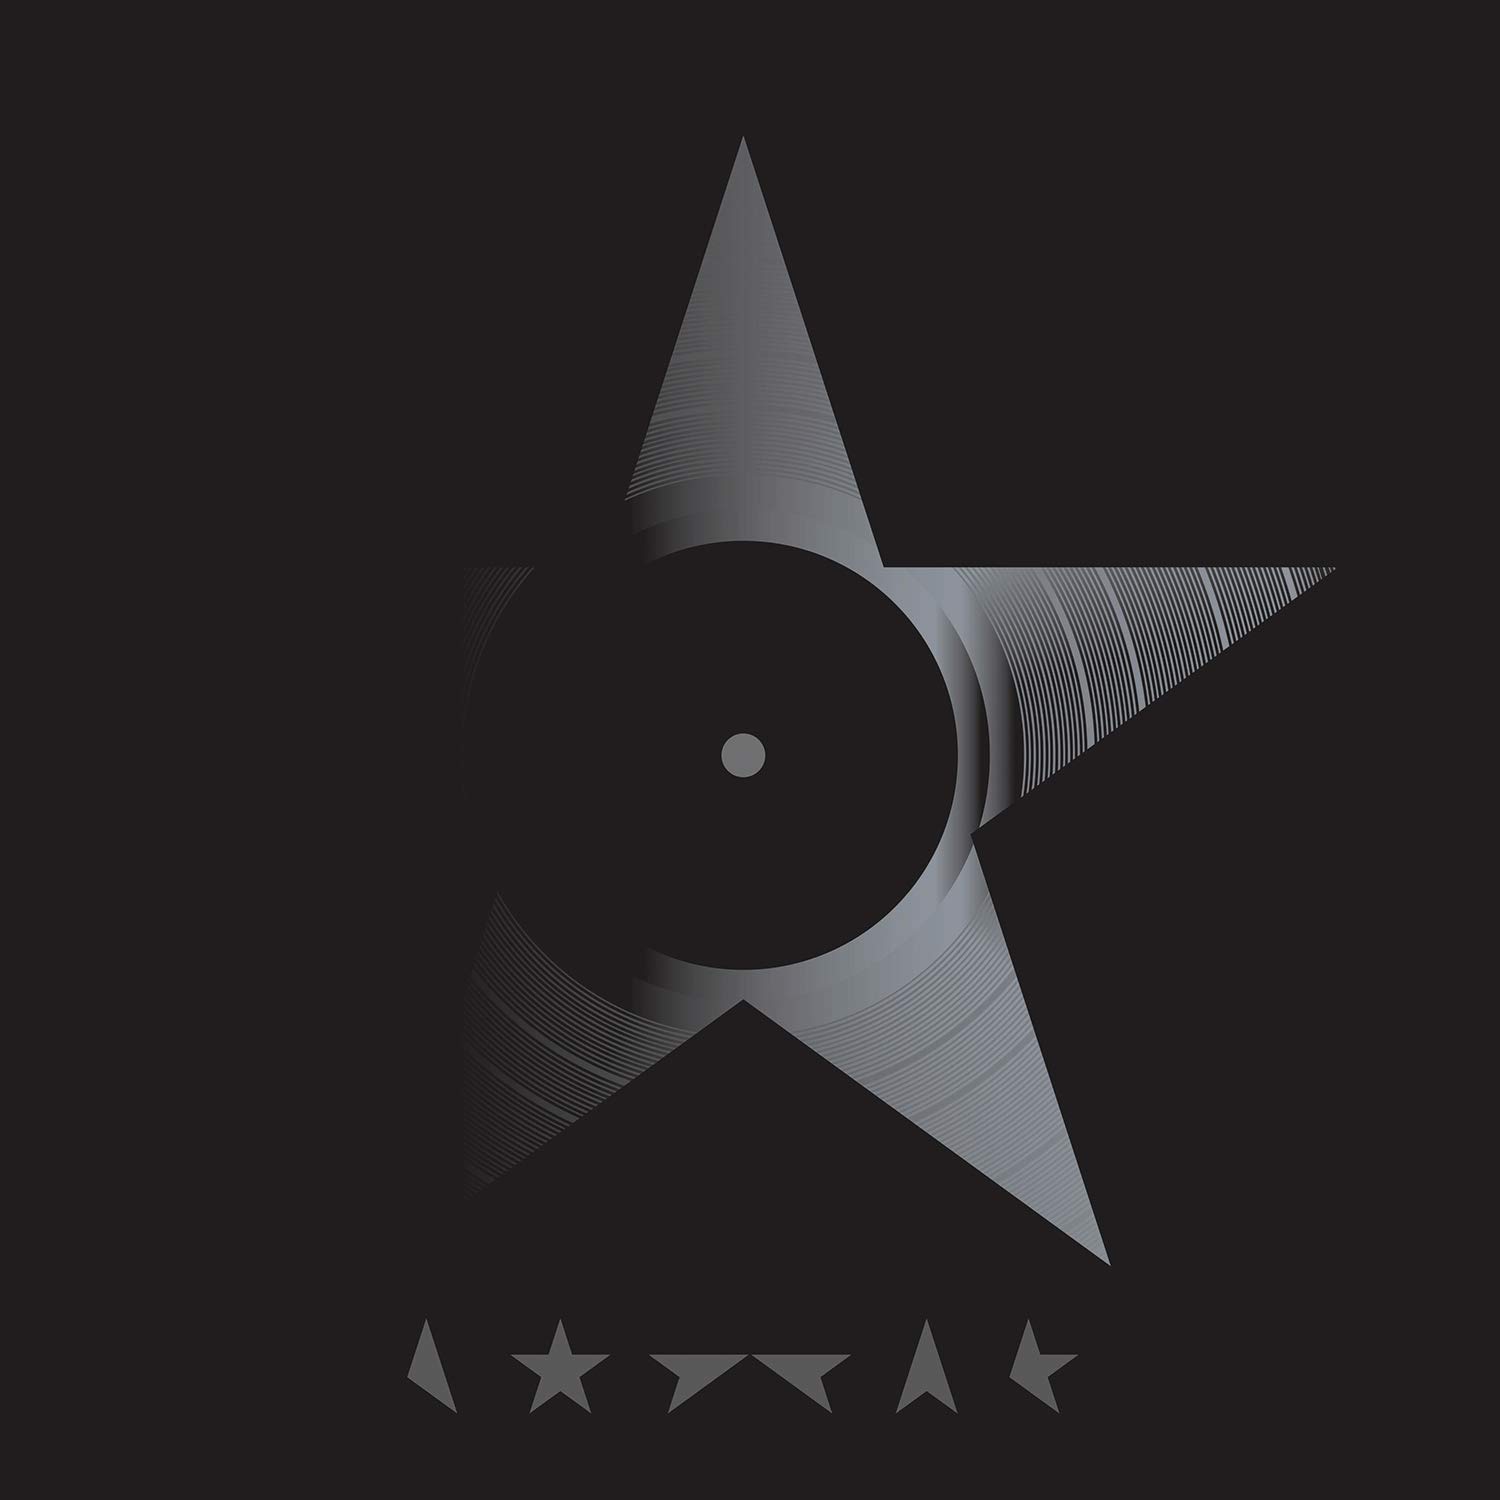 David Bowie "Blackstar" LP